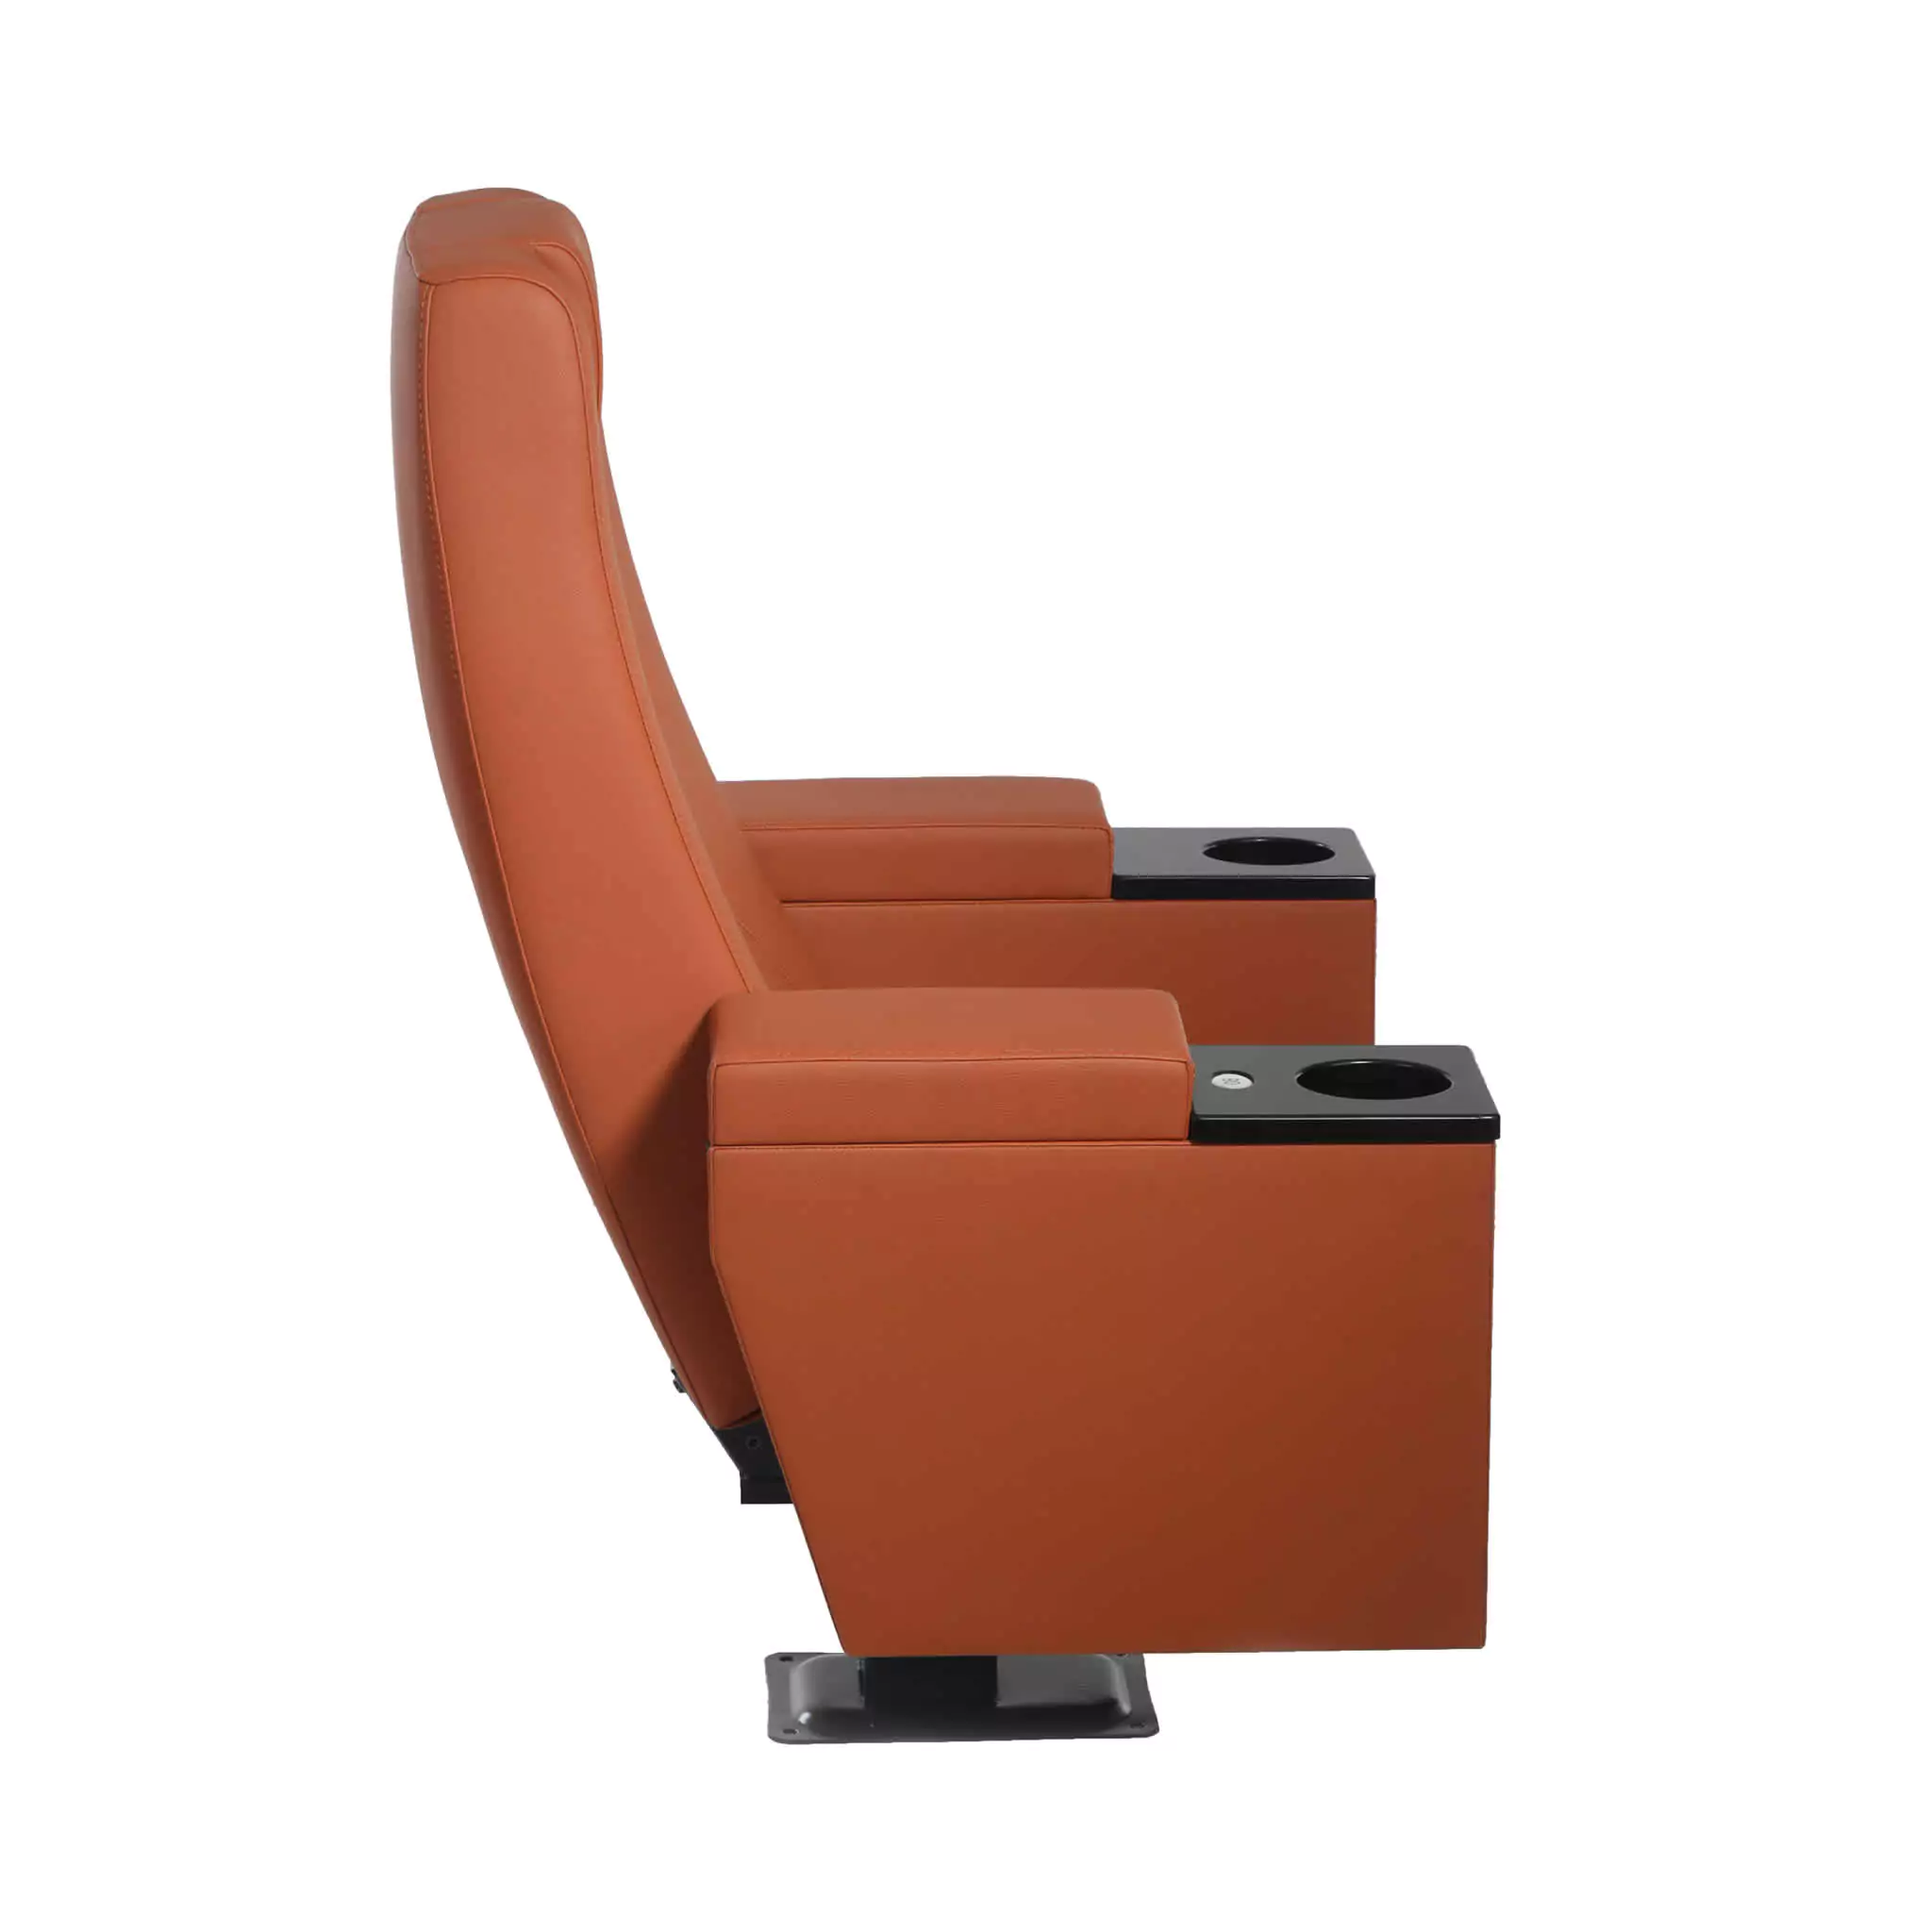 Seat Model: AMETIST